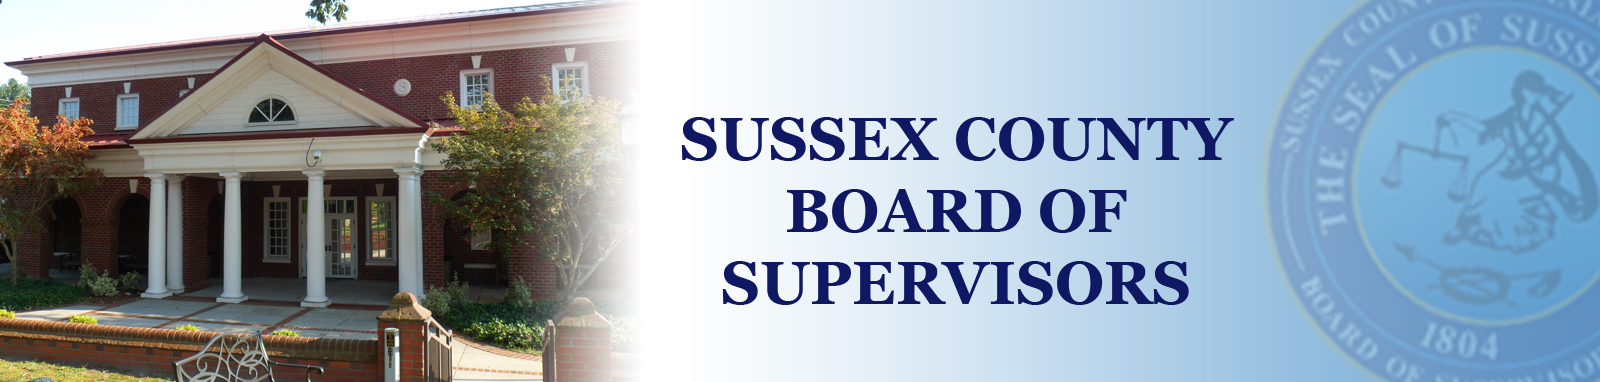 Board of Supervisors